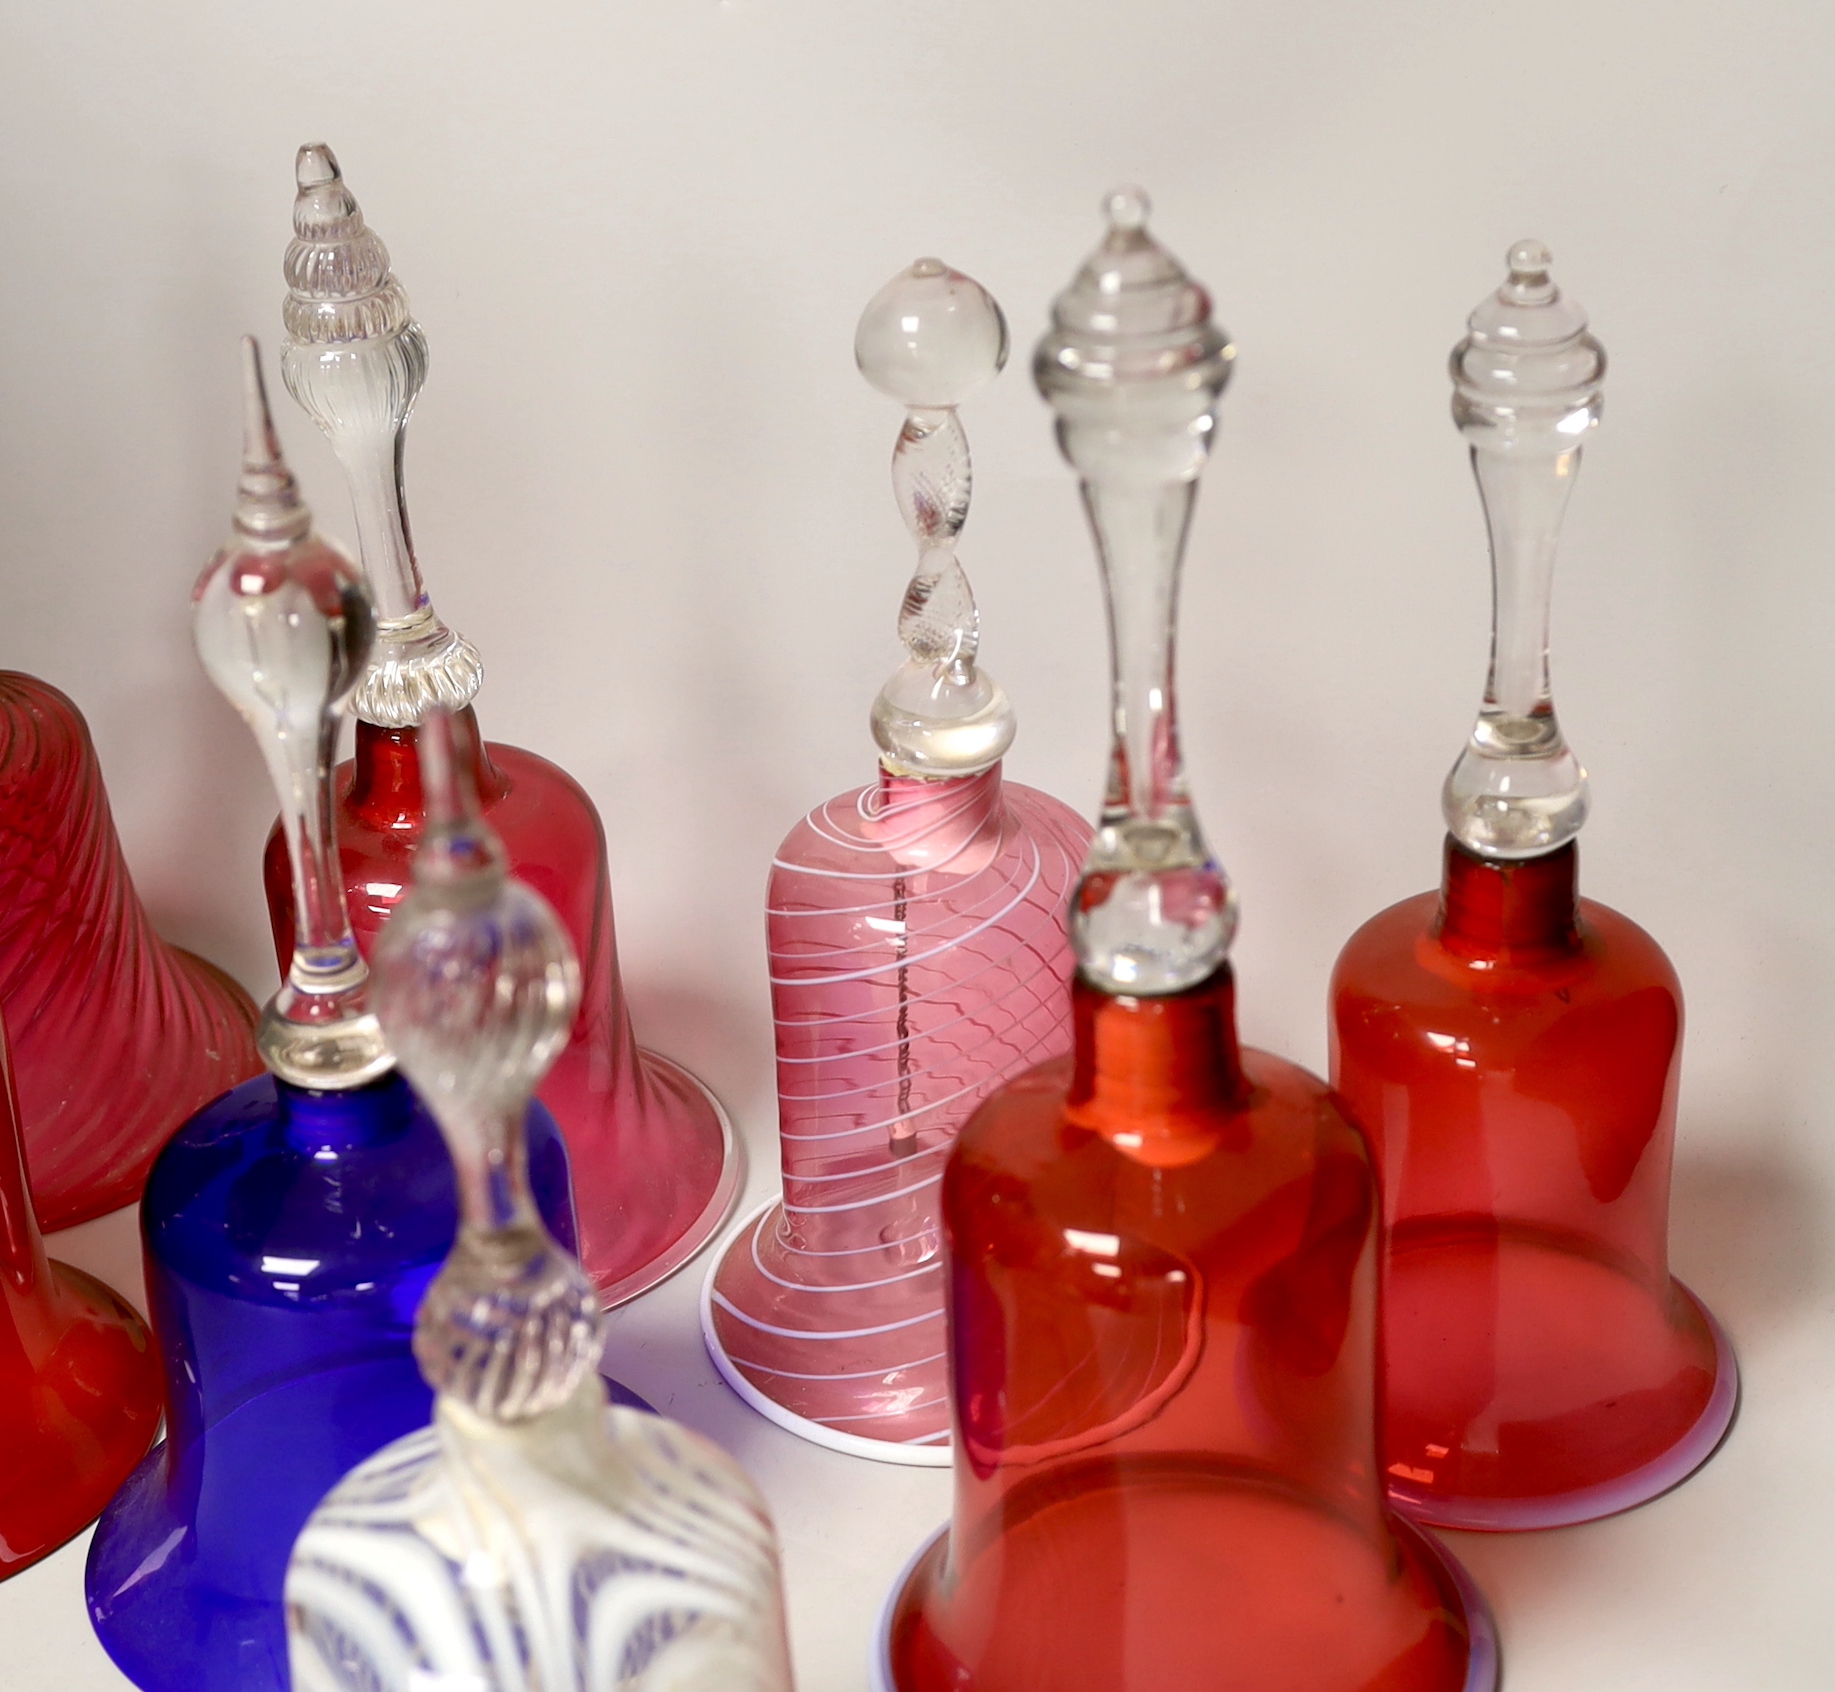 Eight Victorian coloured glass hand bells